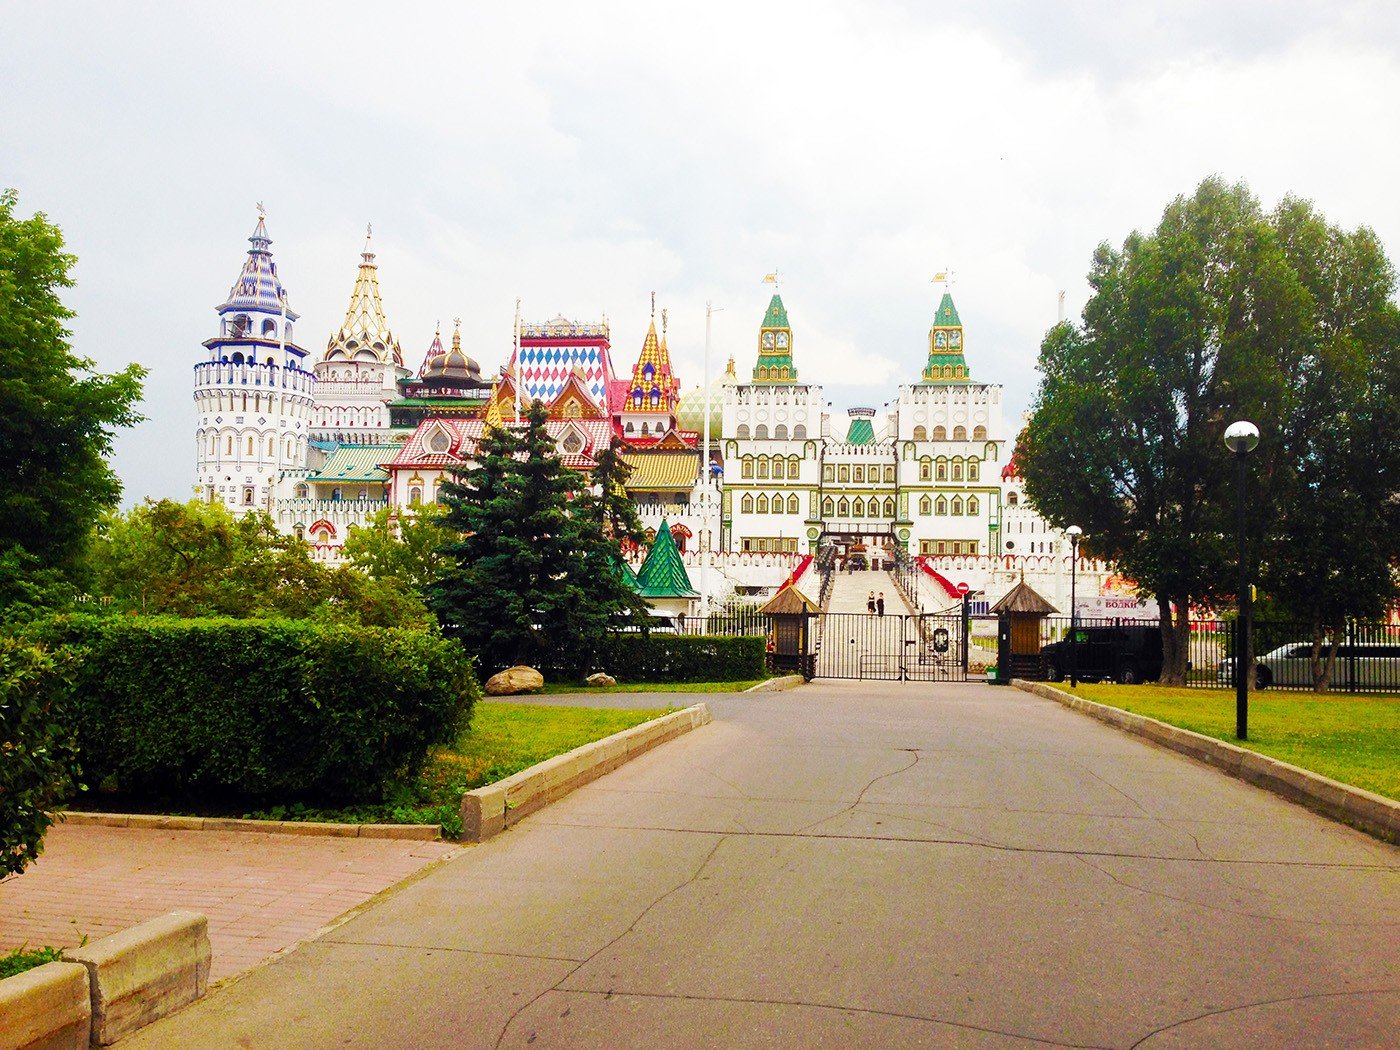 Evopark измайлово. Парк Измайлово. Измайловский парк Москва. Измайловский парк Измайлово. Москва Измайлово Кремль и парк.